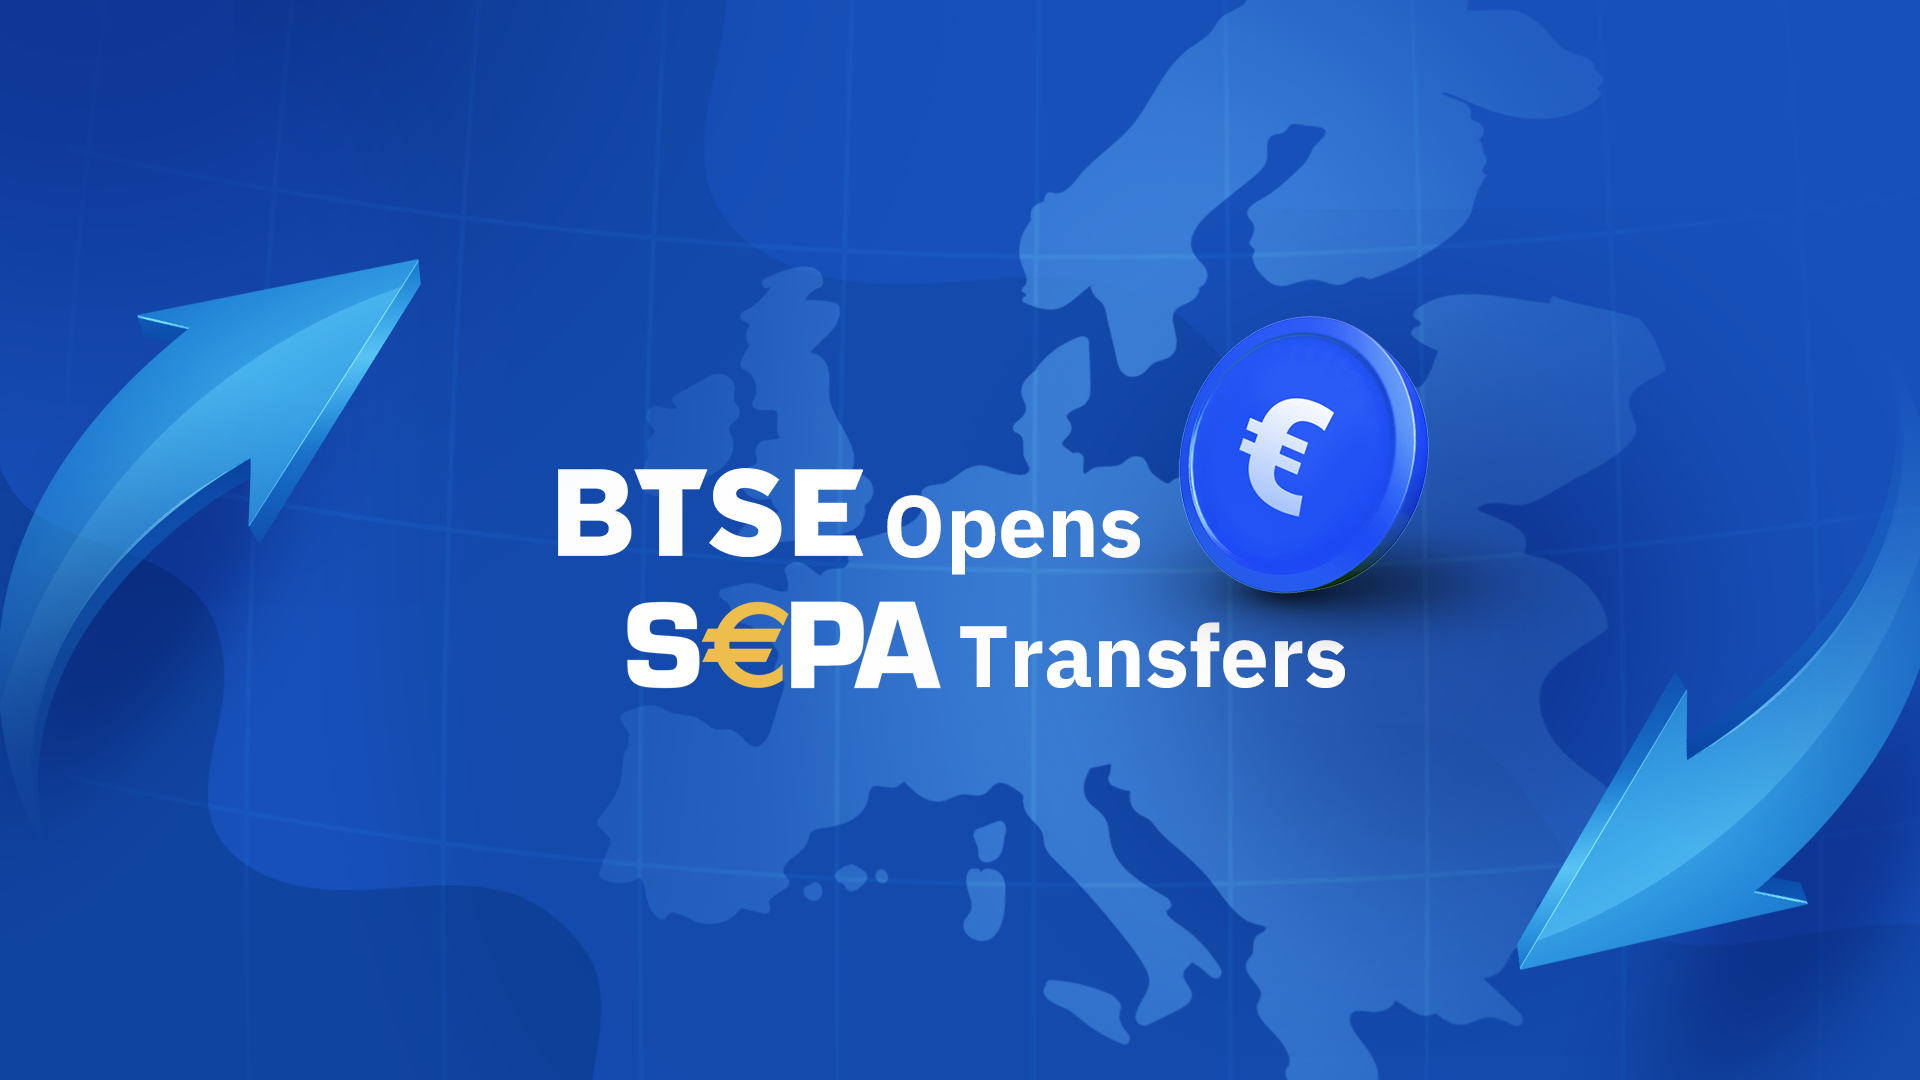 BTSE Opens SEPA With Zero Fee Deposits